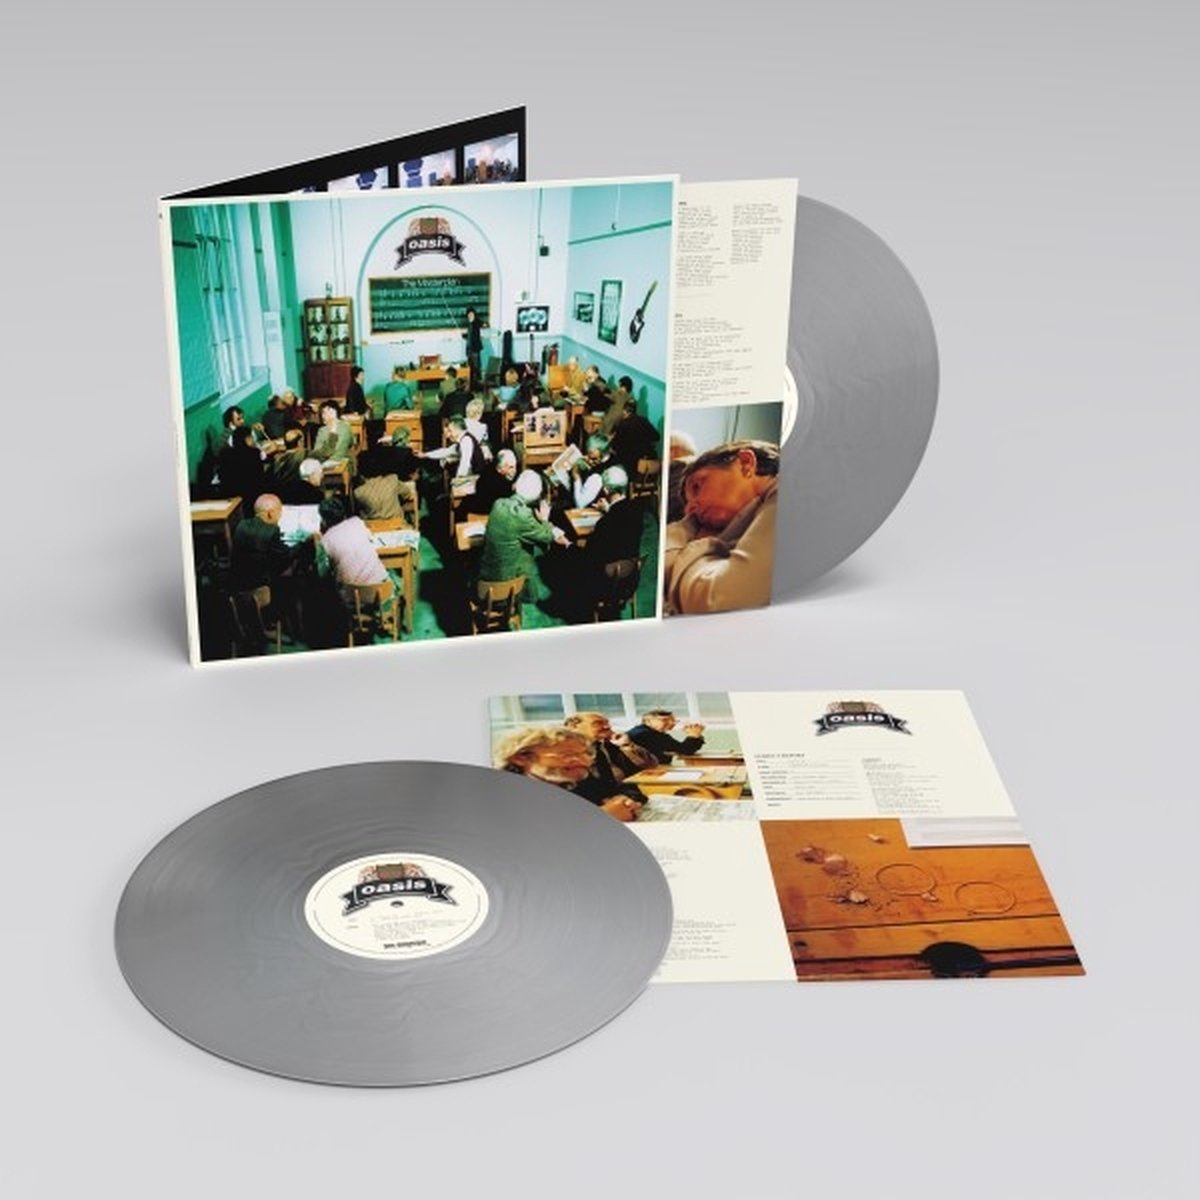 Oasis - Masterplan (25th Anniversary Edition) (Silver Vinyl)